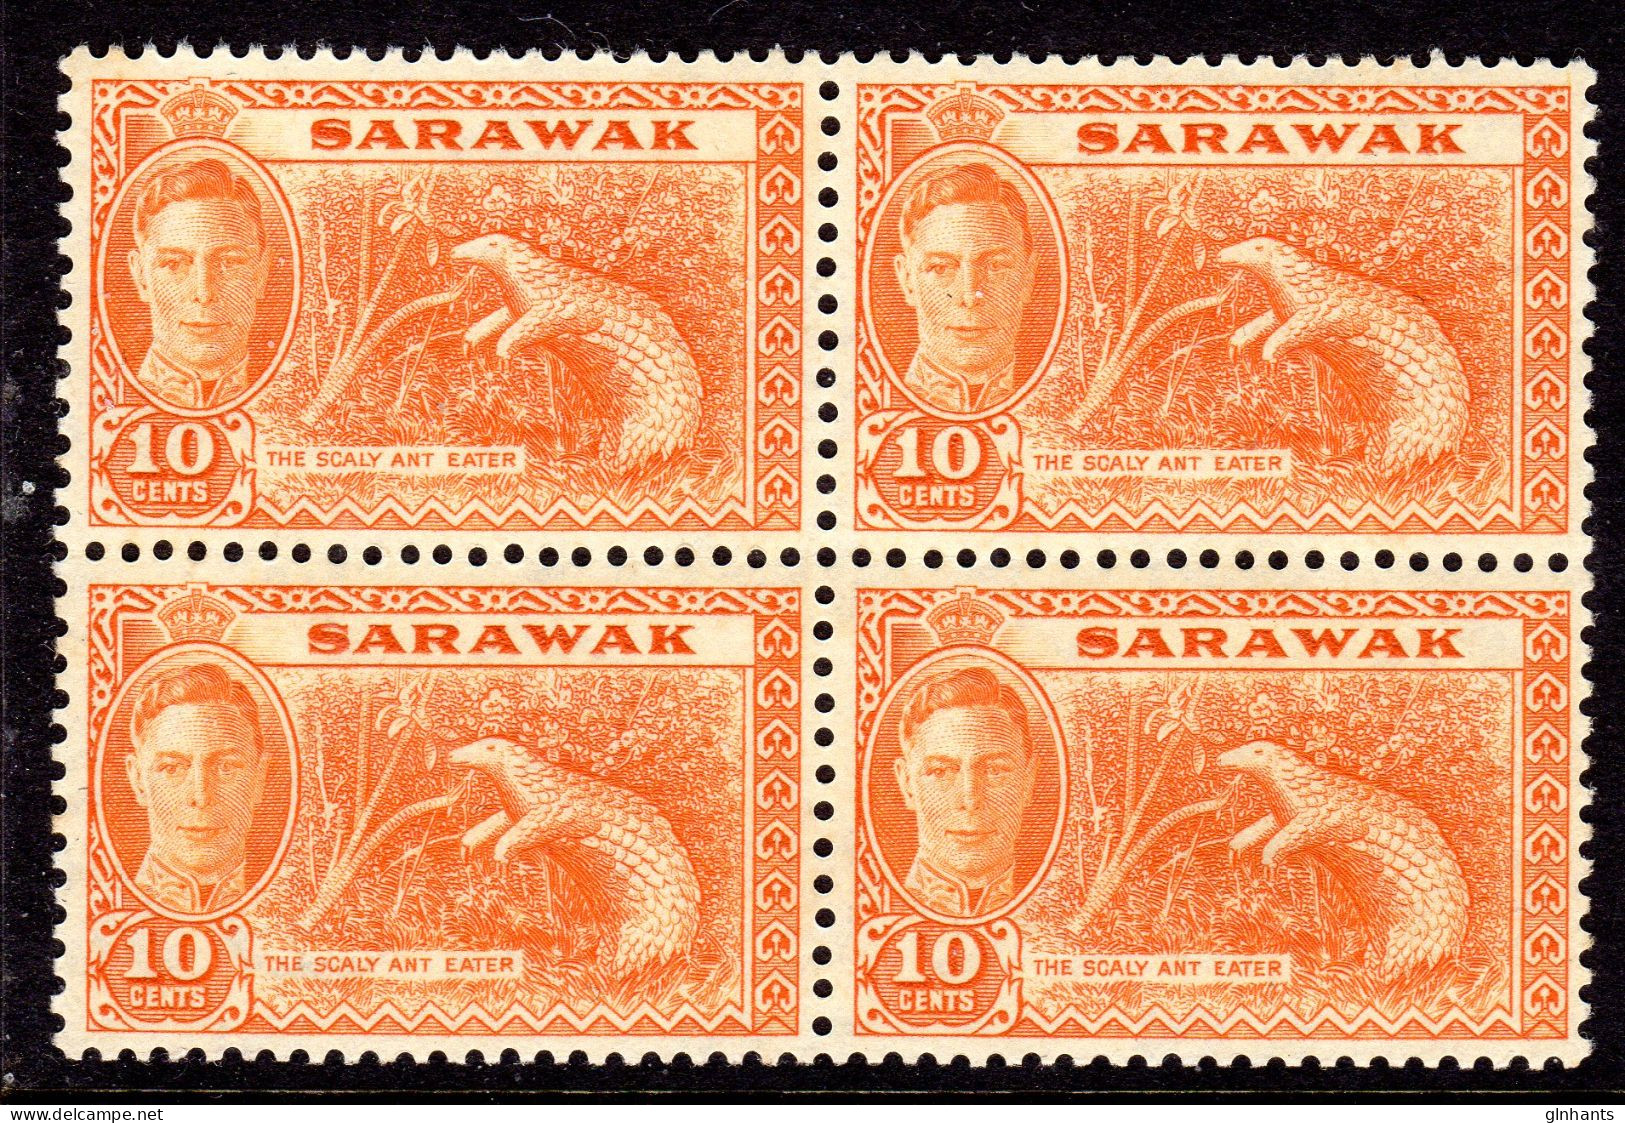 MALAYSIA SARAWAK - 1950 KGVI 10c ANTEATER ANIMAL IN BLOCK OF 4 FINE MNH **  SG 177 X 4 - Sarawak (...-1963)